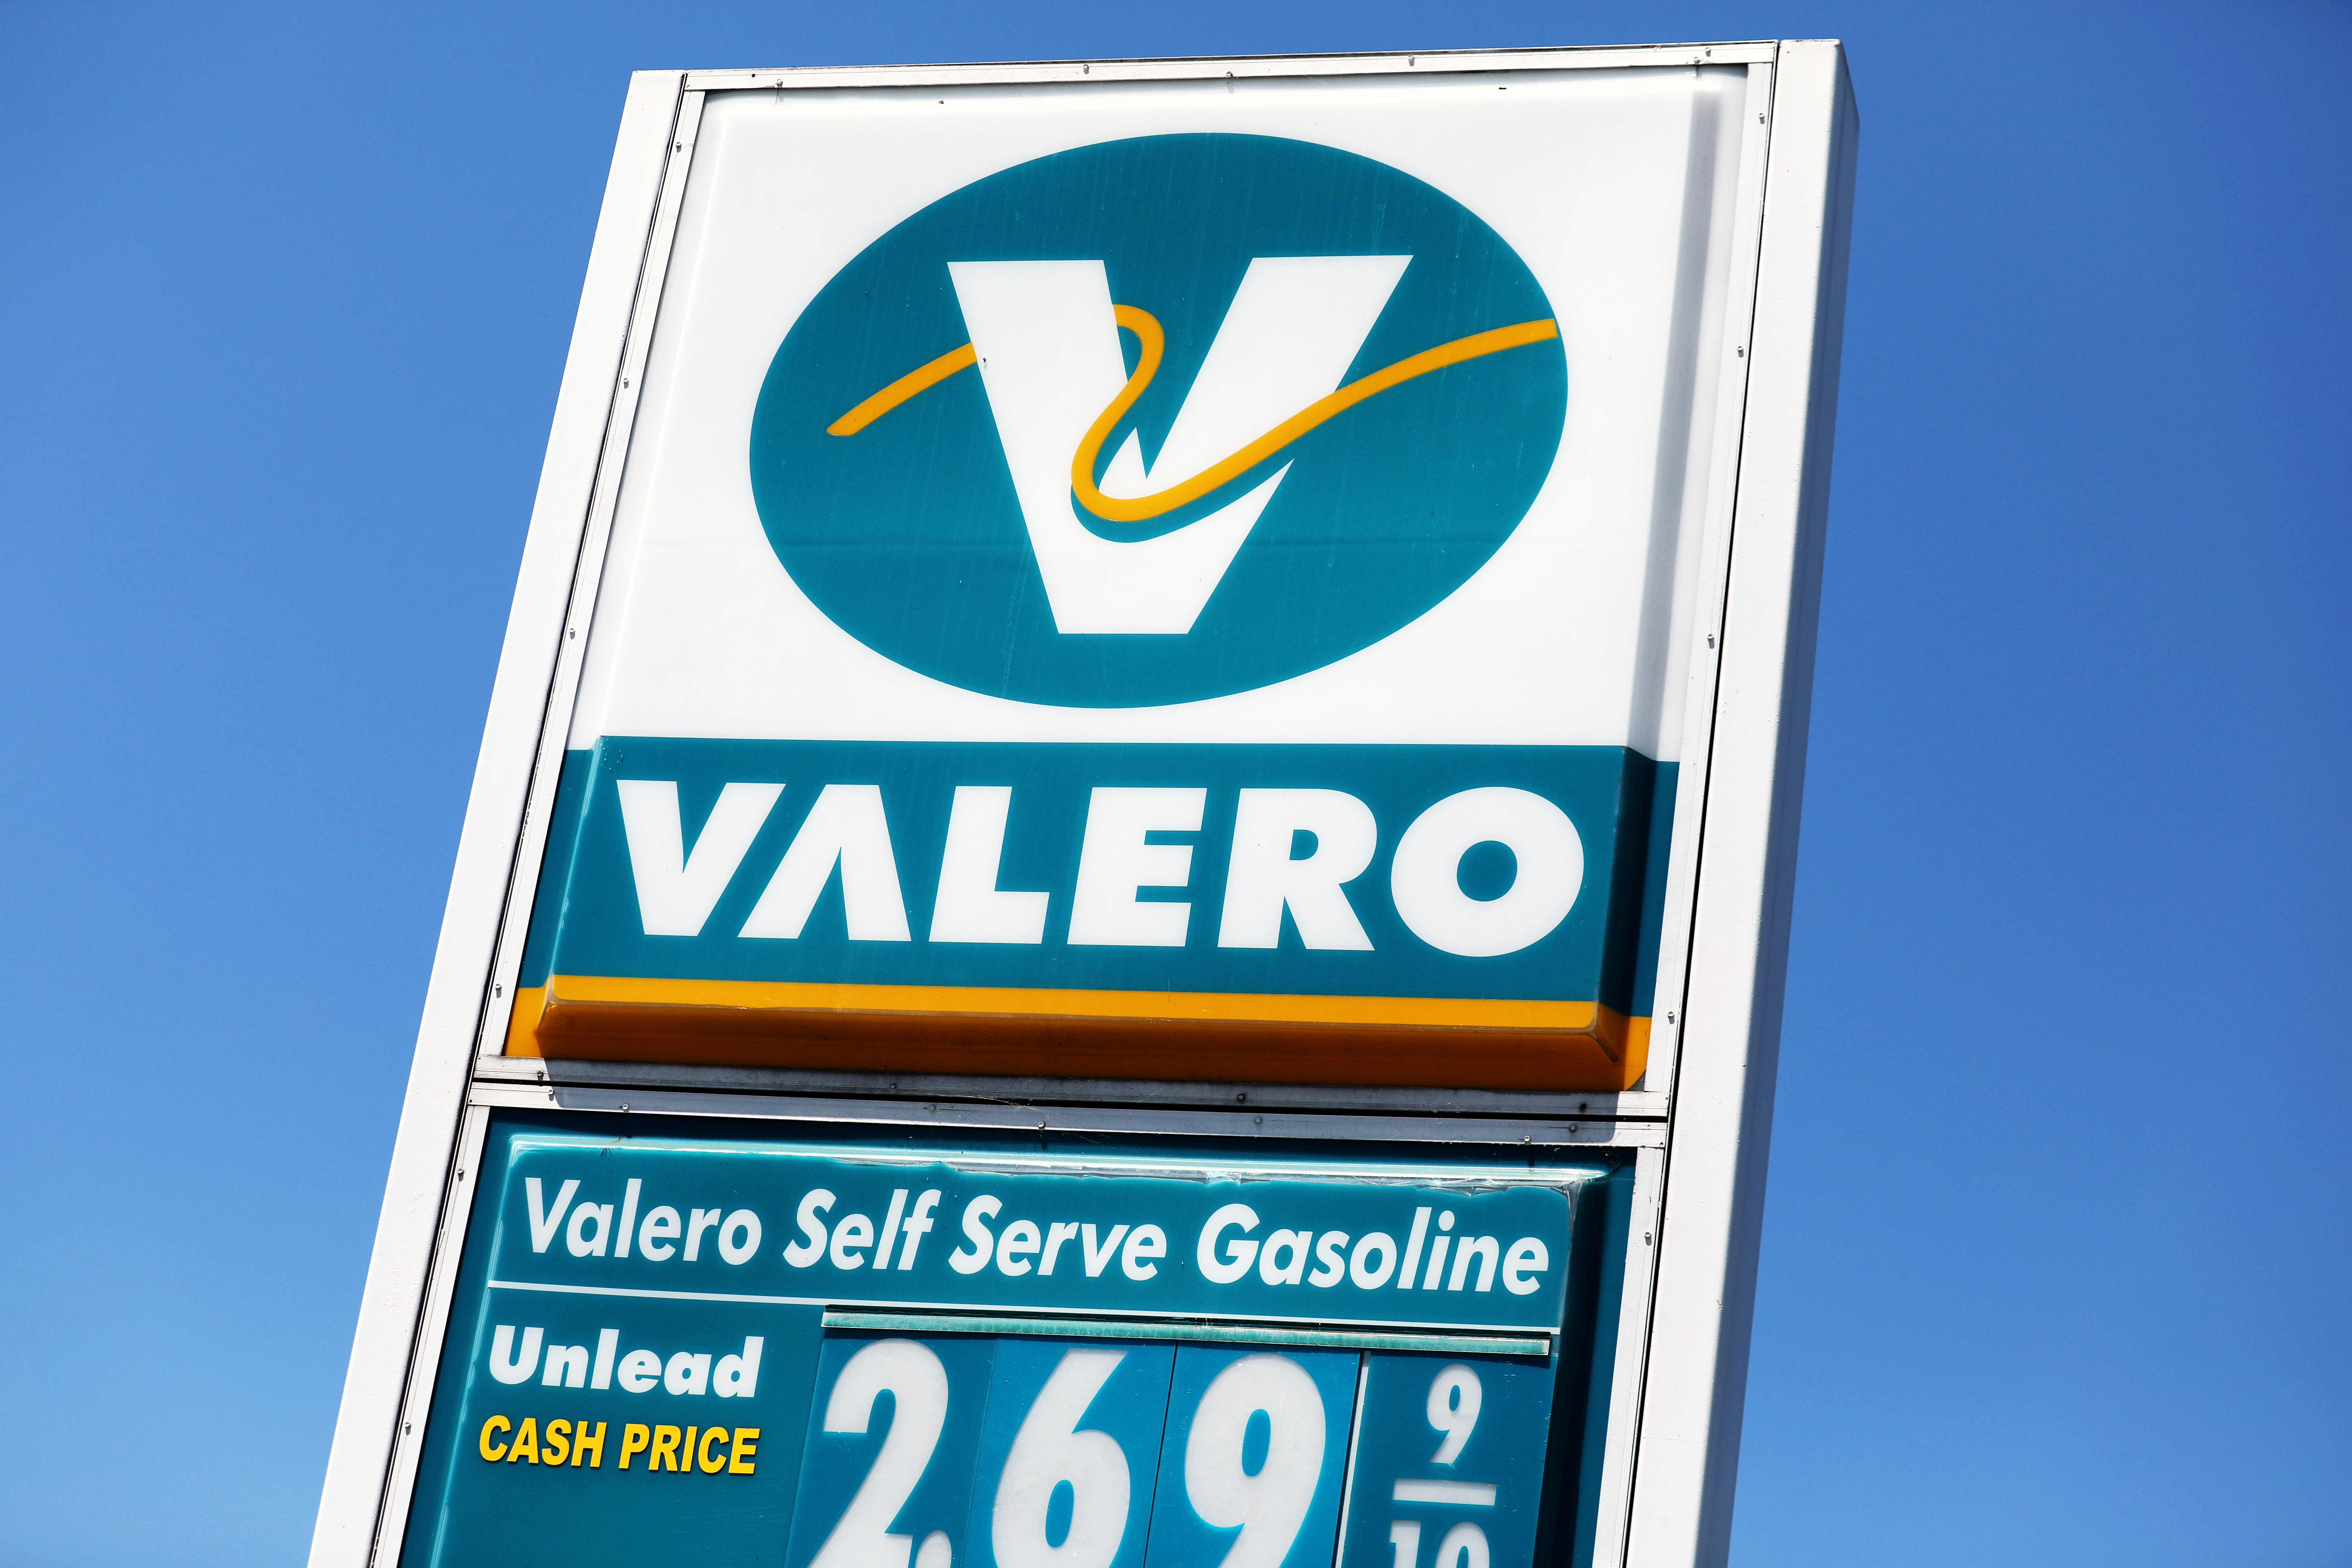 Valero Gas Station in California